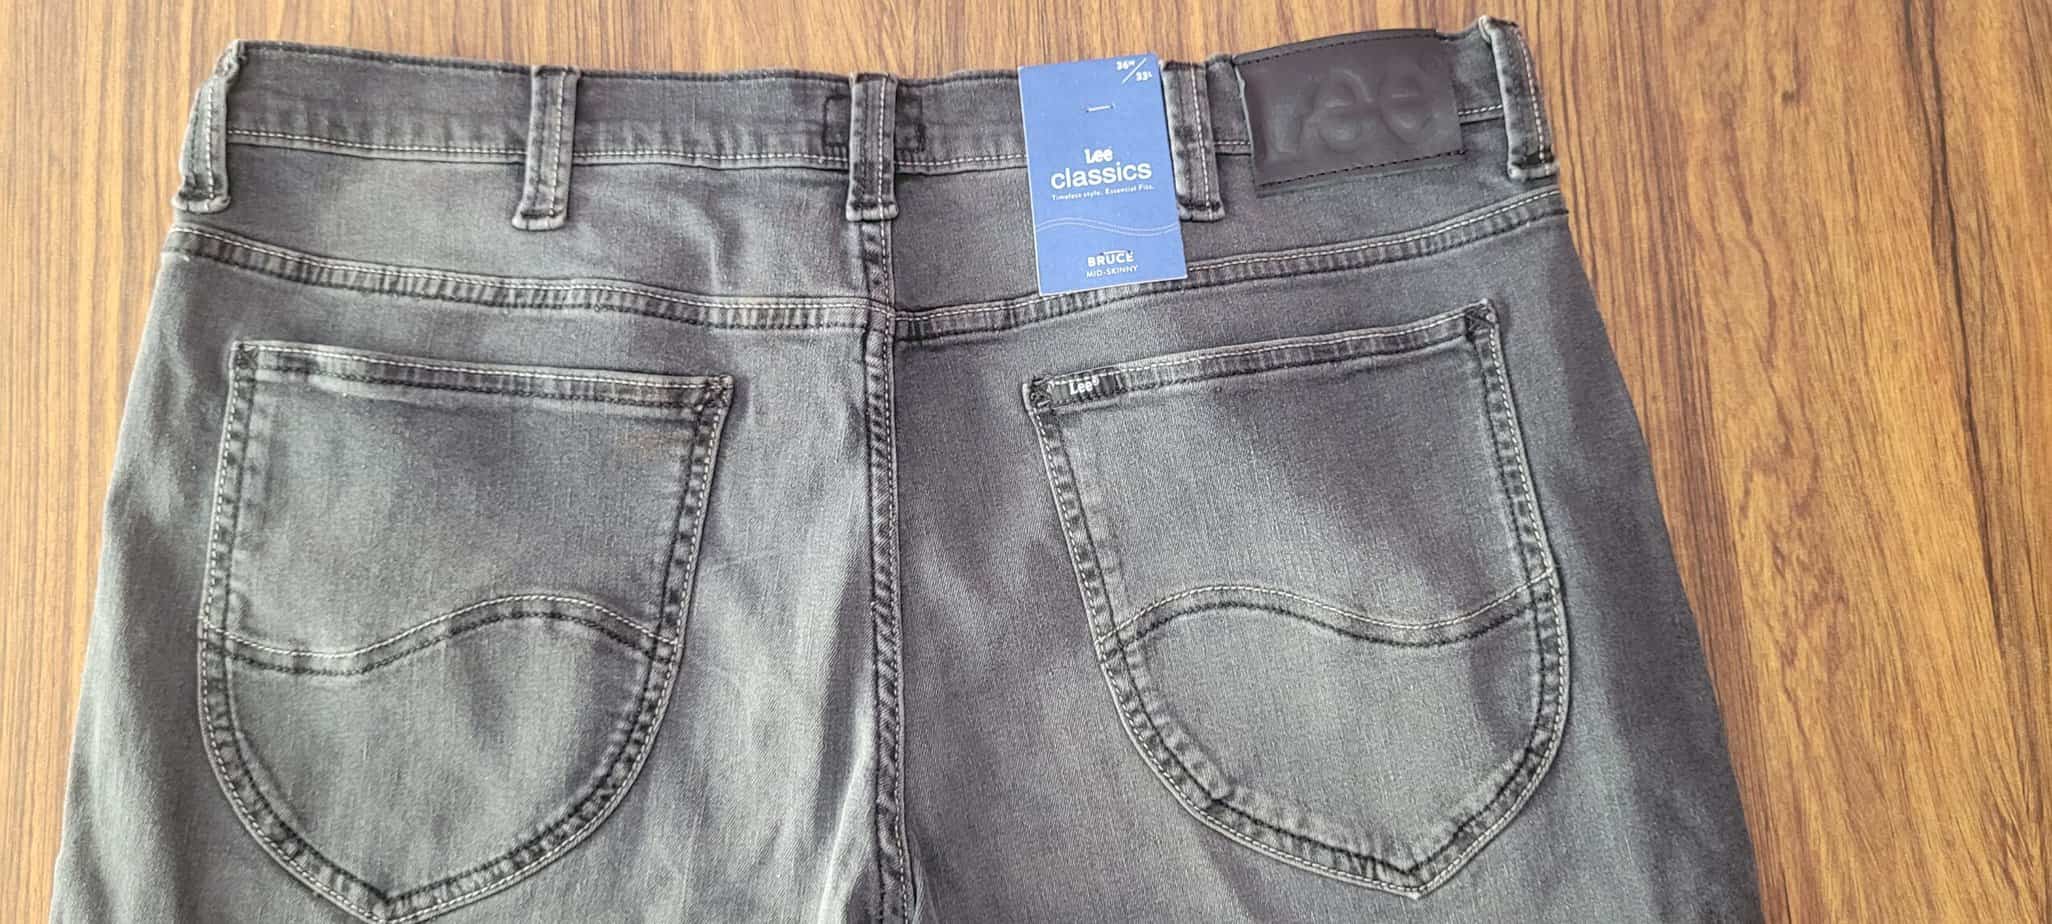 How To Identify Original Lee Jeans? (Bullet-Proof Method!)